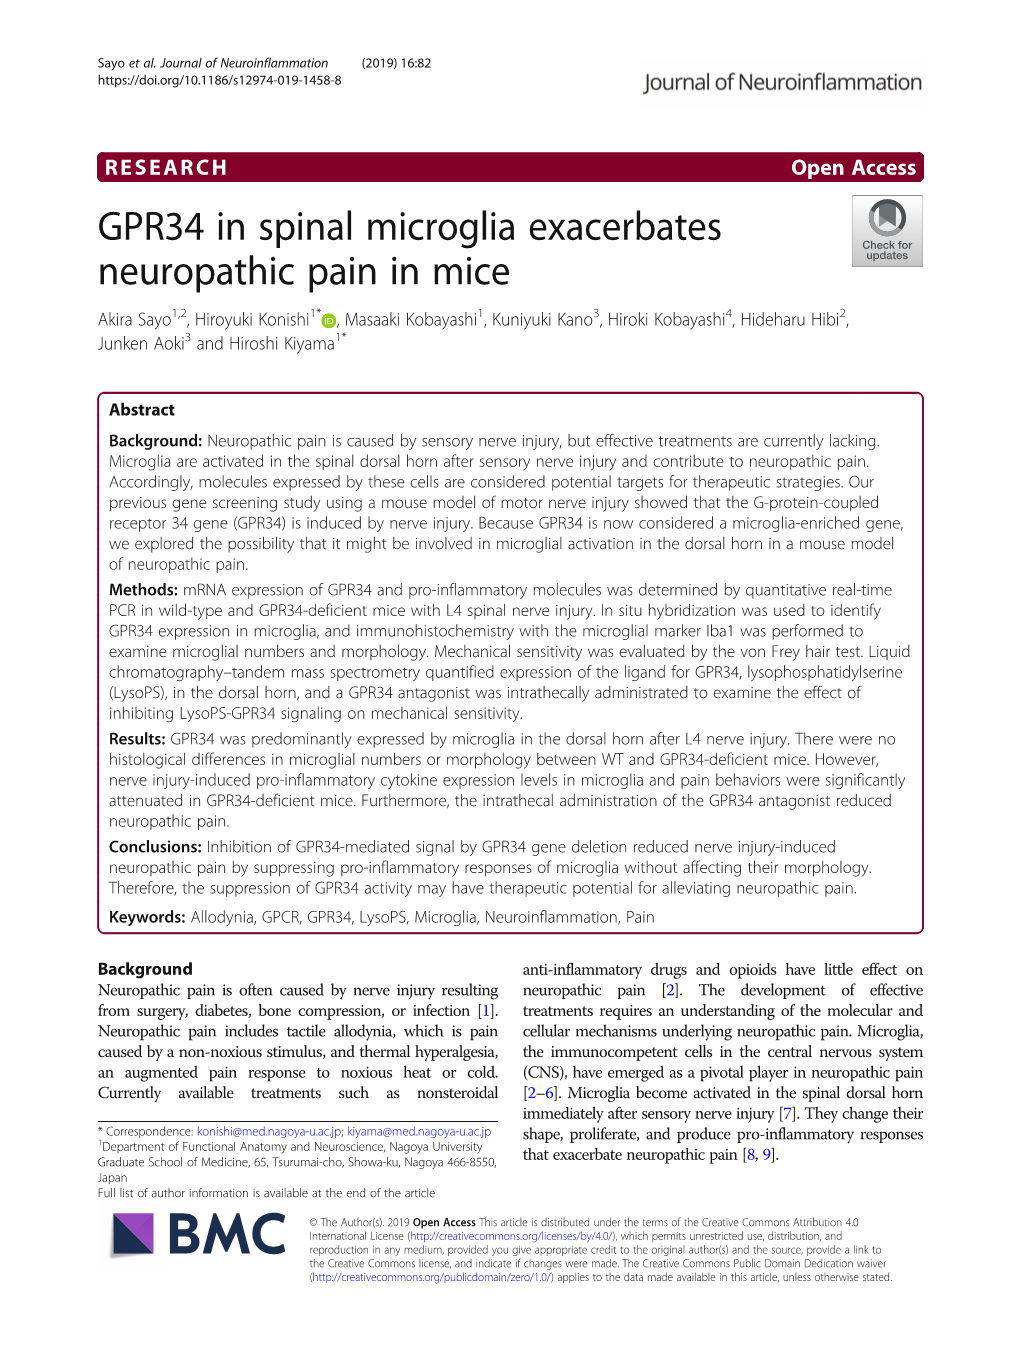 GPR34 in Spinal Microglia Exacerbates Neuropathic Pain in Mice